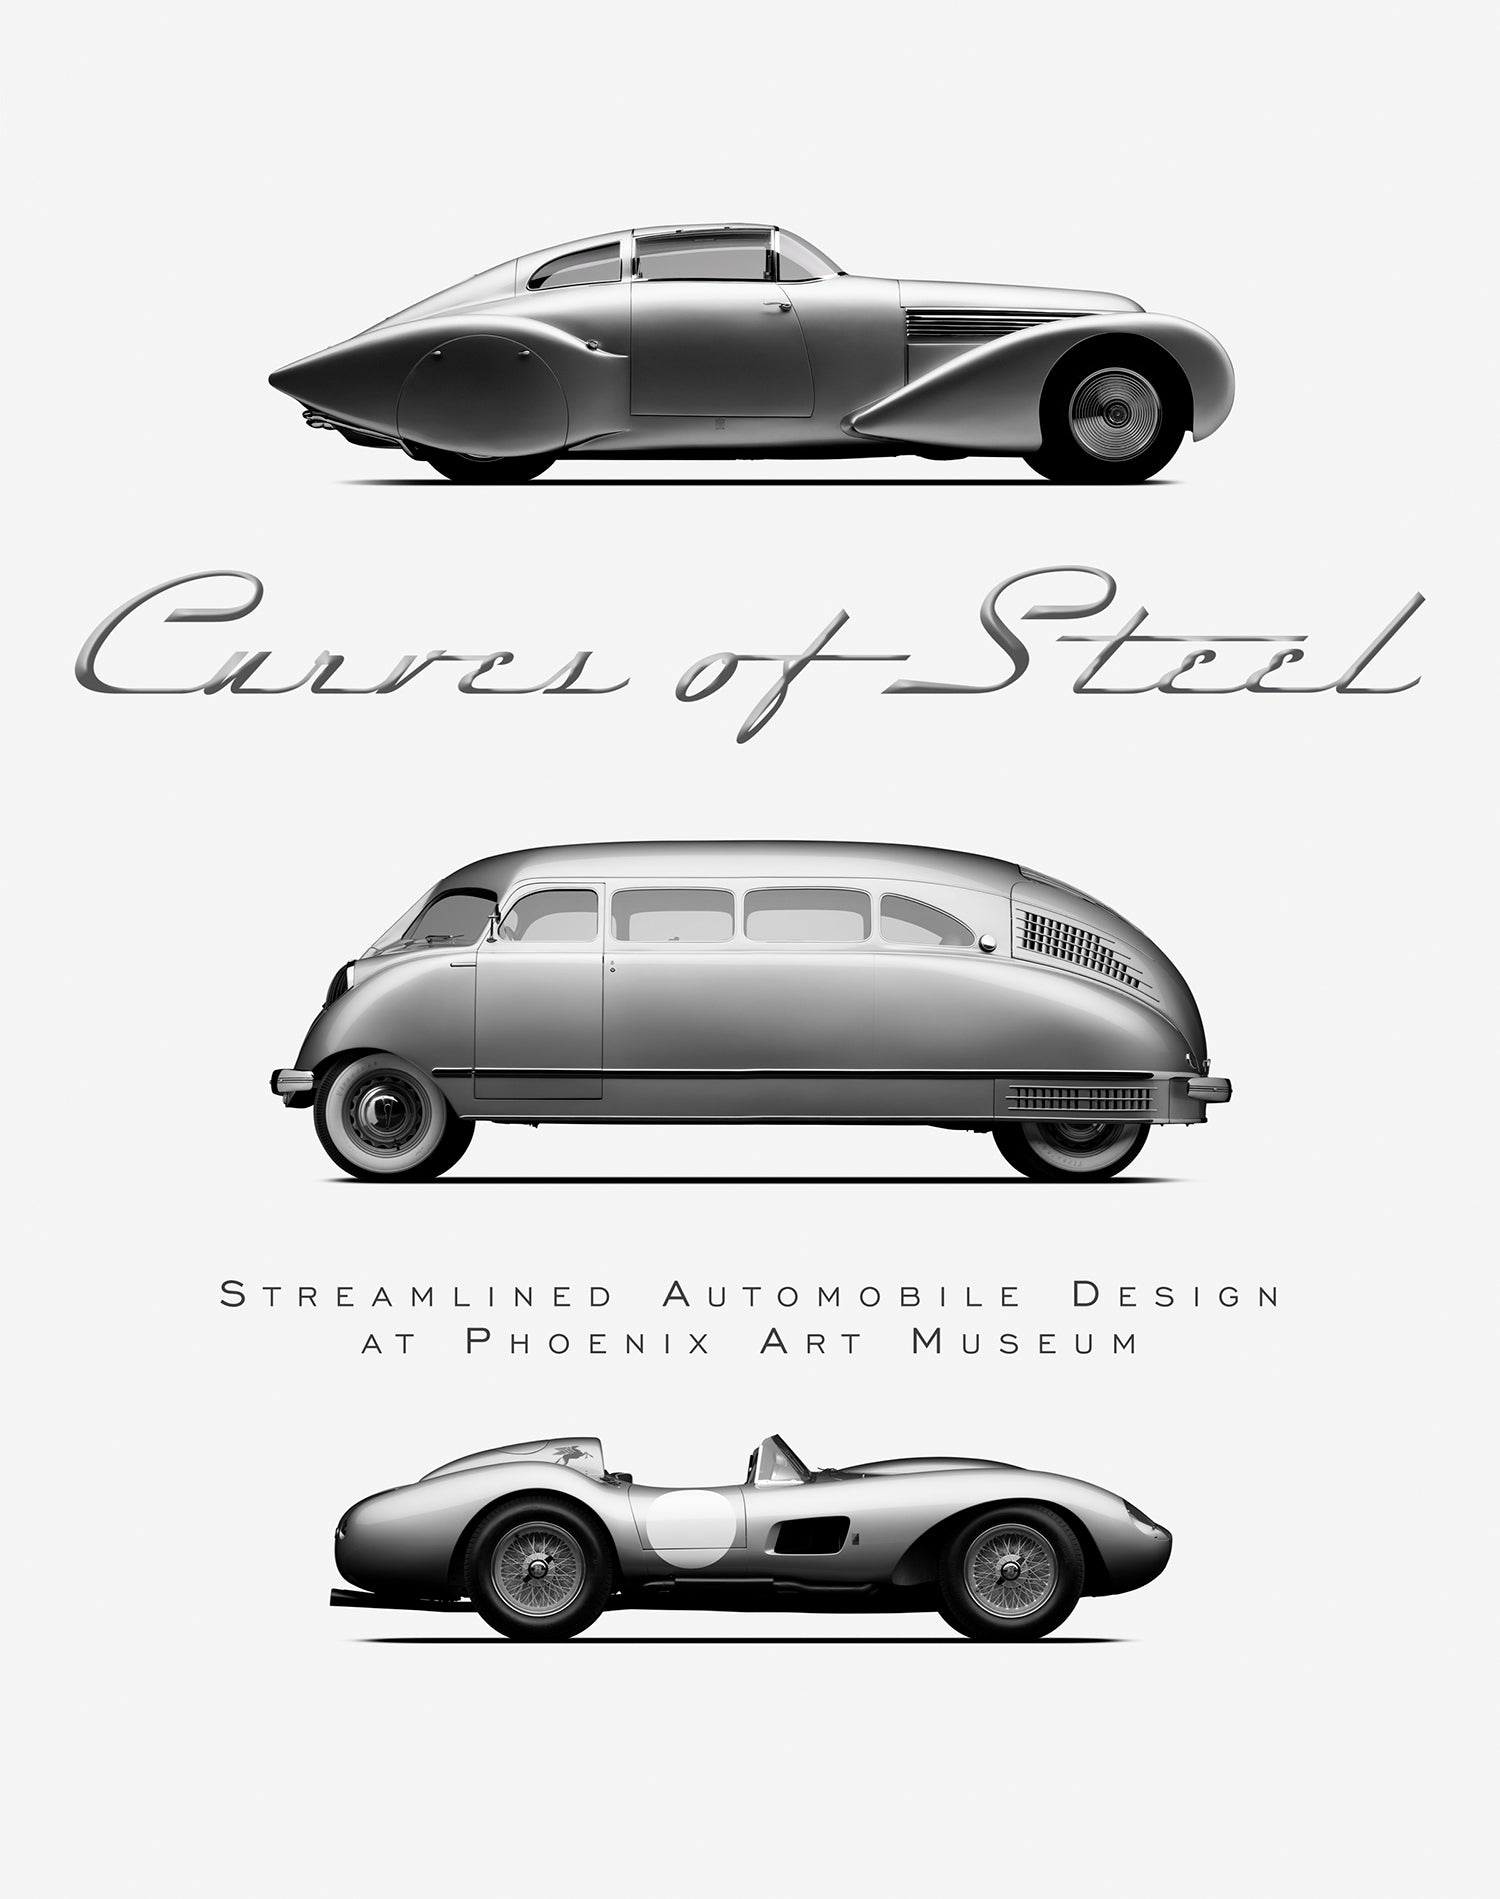 Curves of Steel by Michael Furman